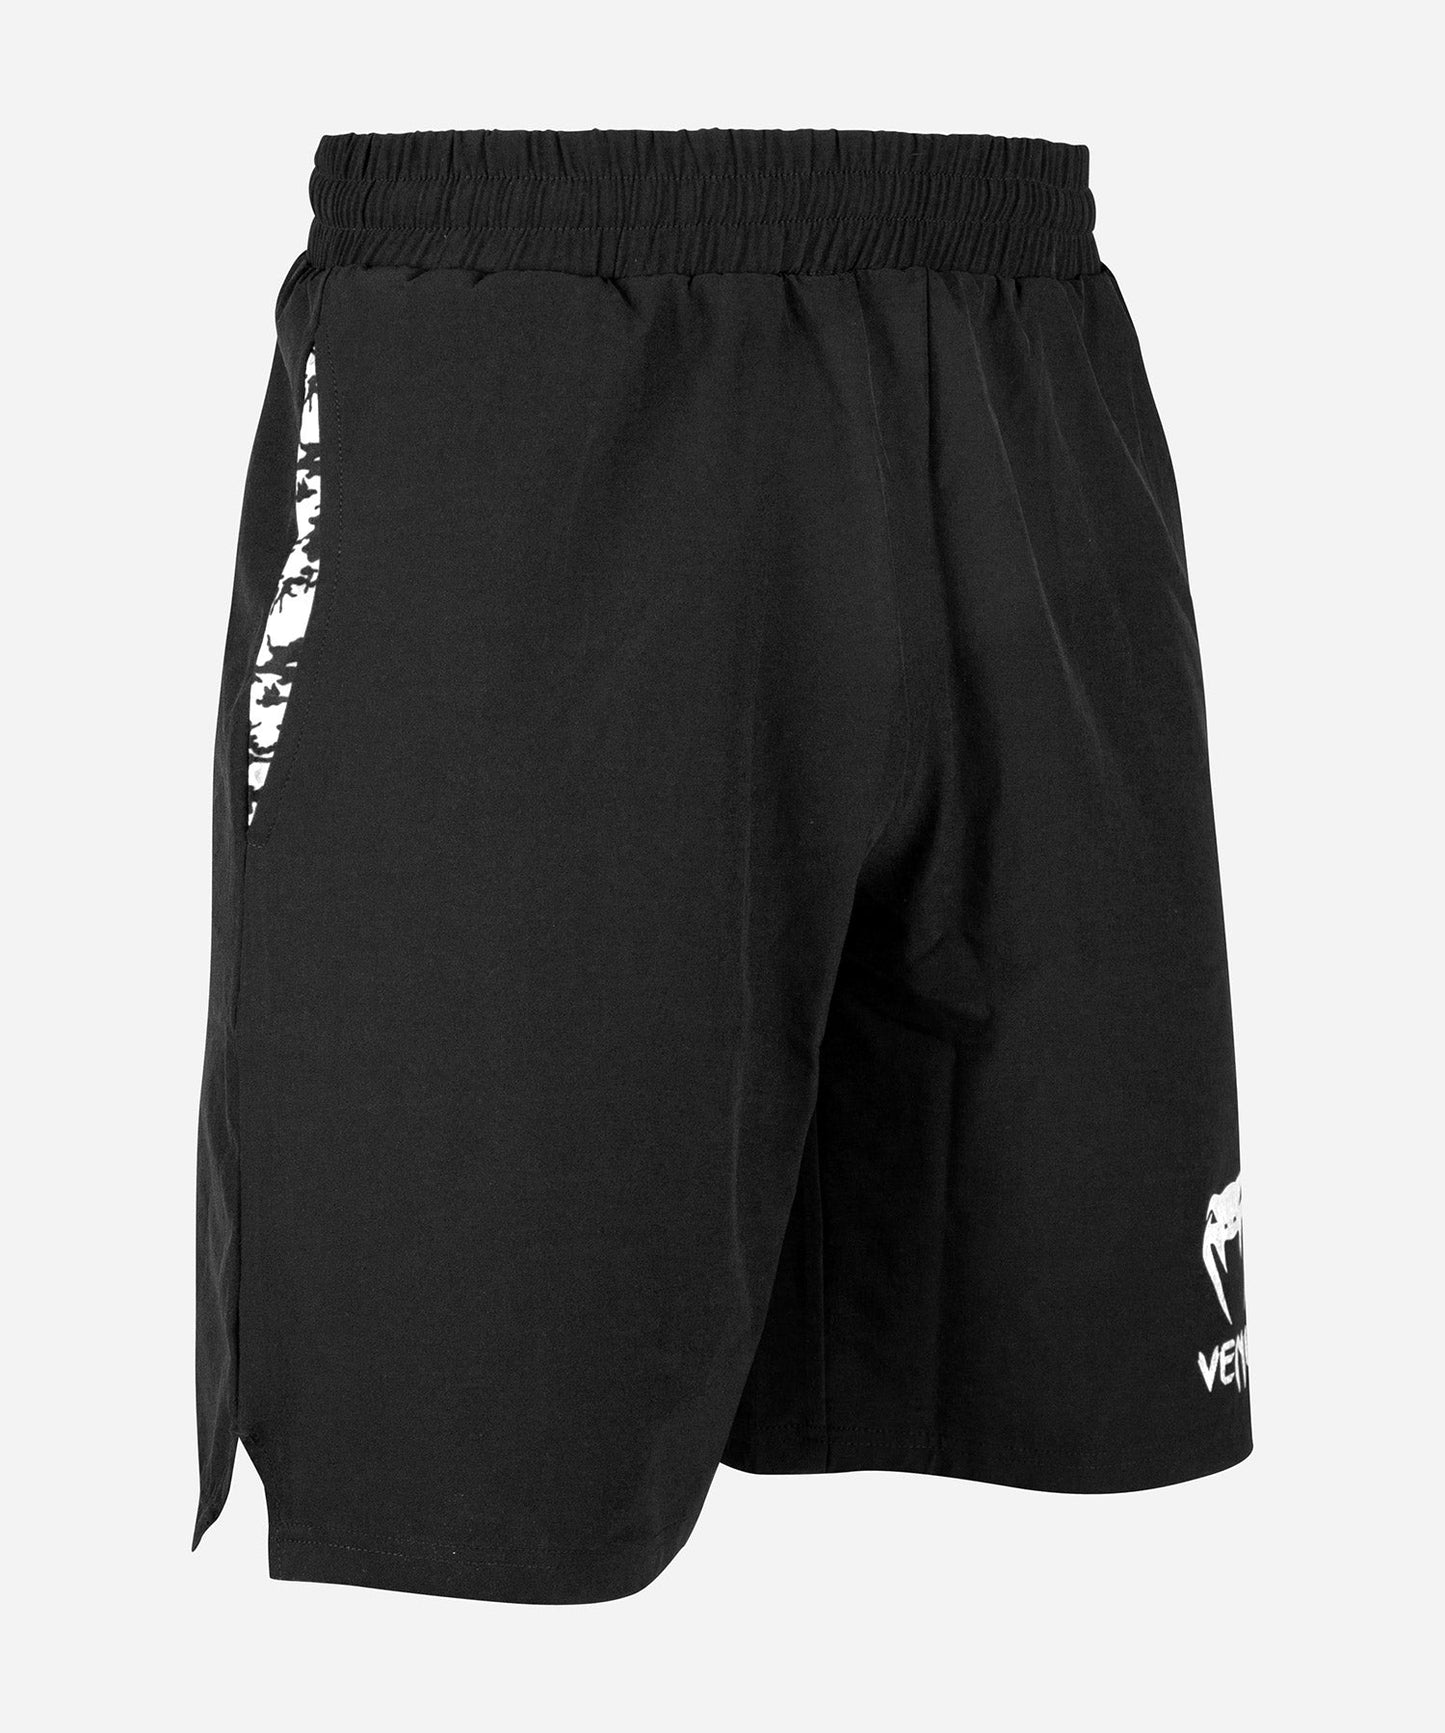 Venum Classic Training Shorts - Black/White